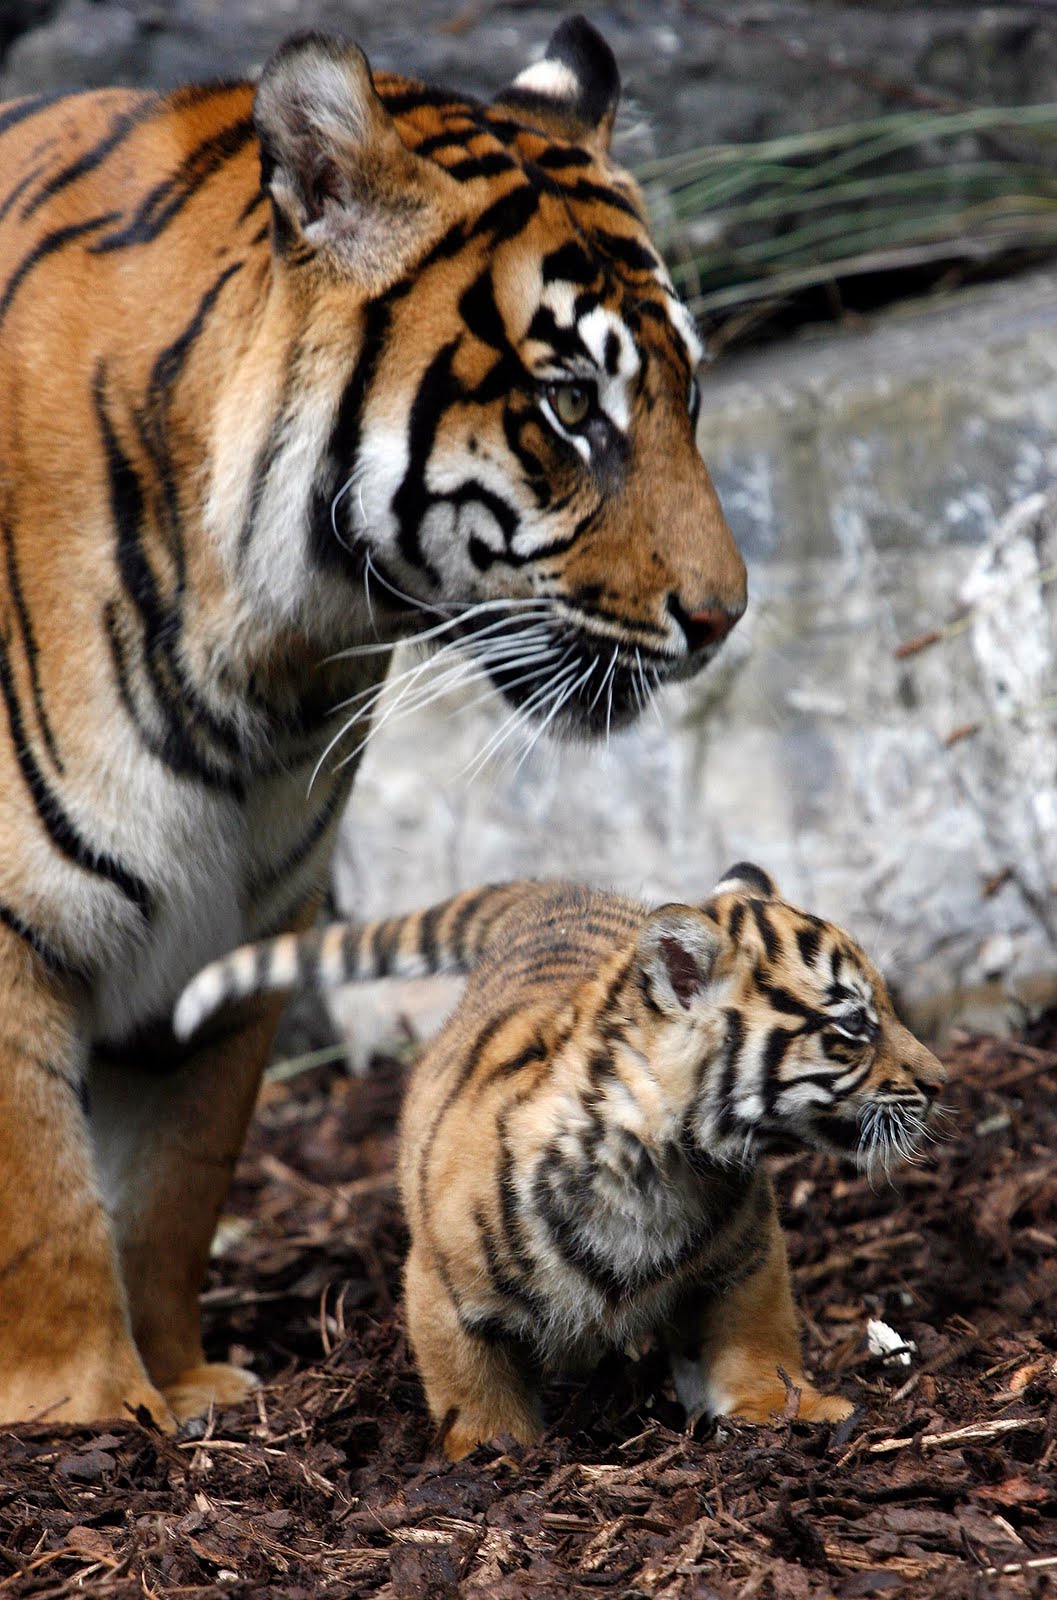 Сохранение тигров. Тигры любовь. Tigress and Cubs. The Baby Tigers Loved.